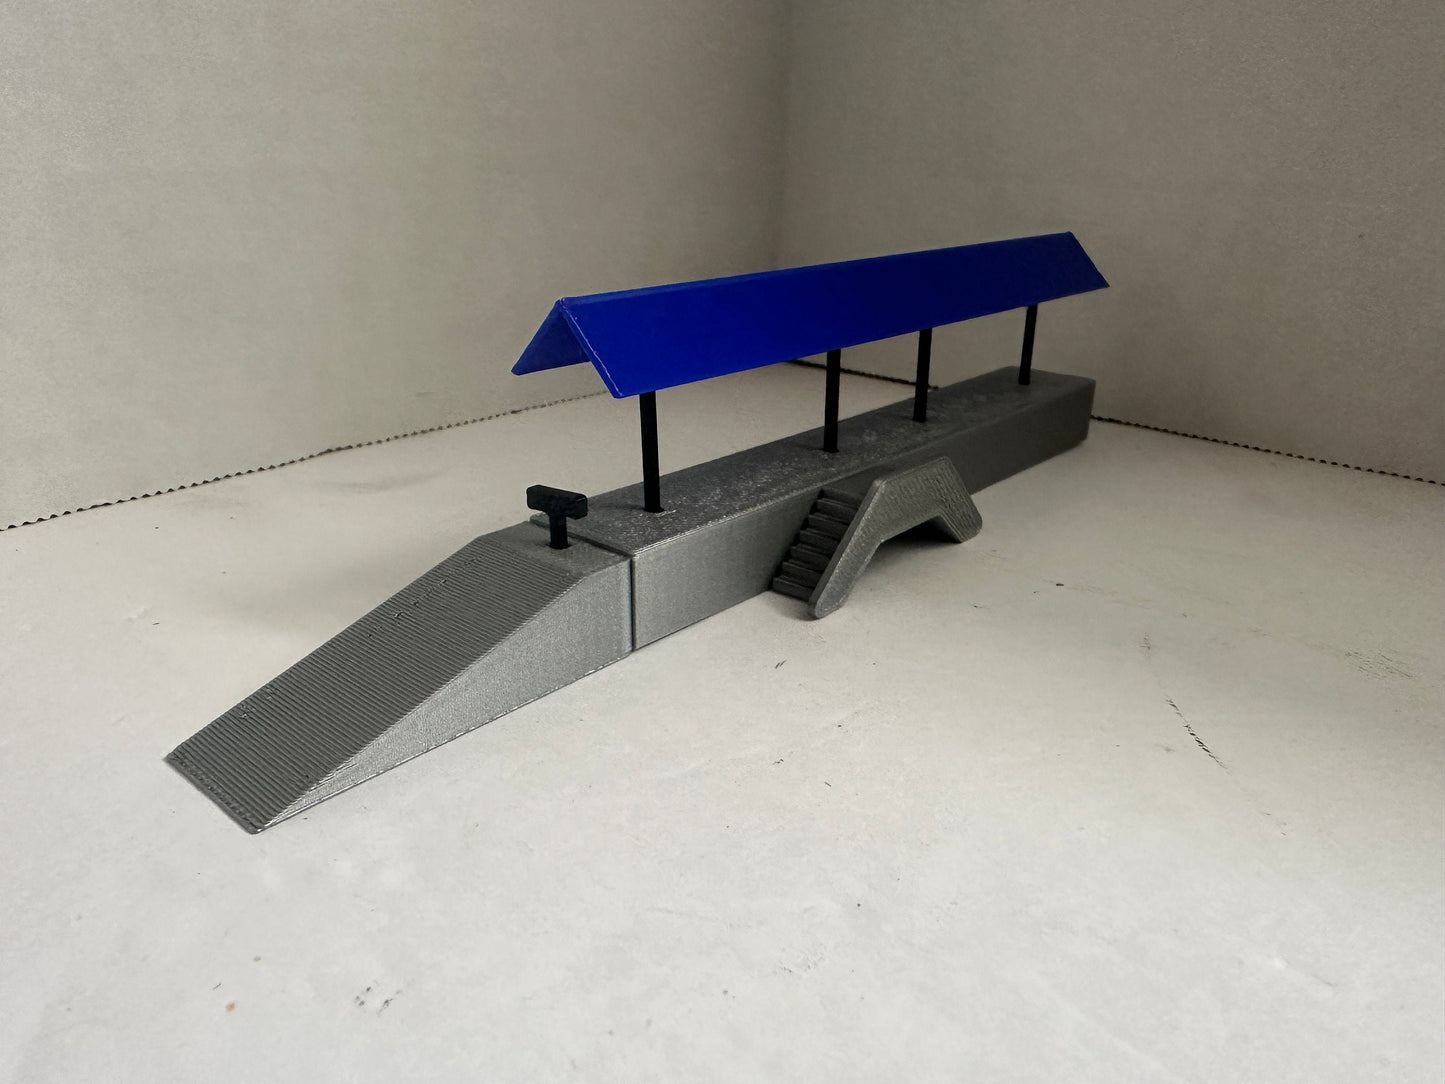 N - Scale Passenger Platform Kit for 1:160 Model Railroad Train Scenery Building Loading Dock